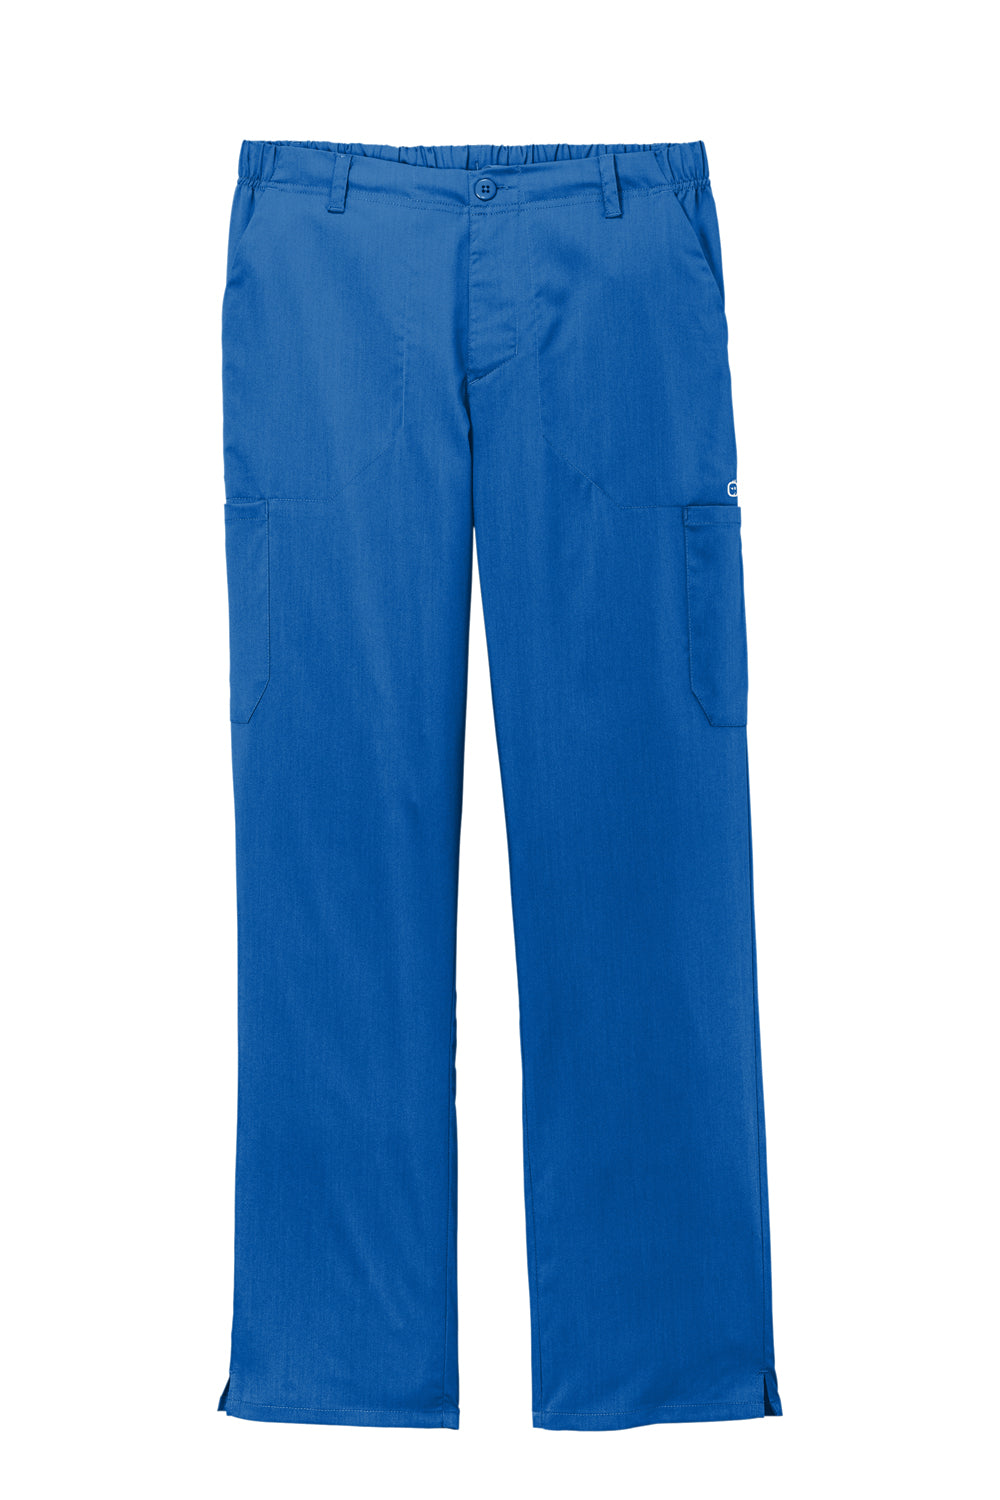 Wonderwink WW5058 Premiere Flex Cargo Pants Royal Blue Flat Front